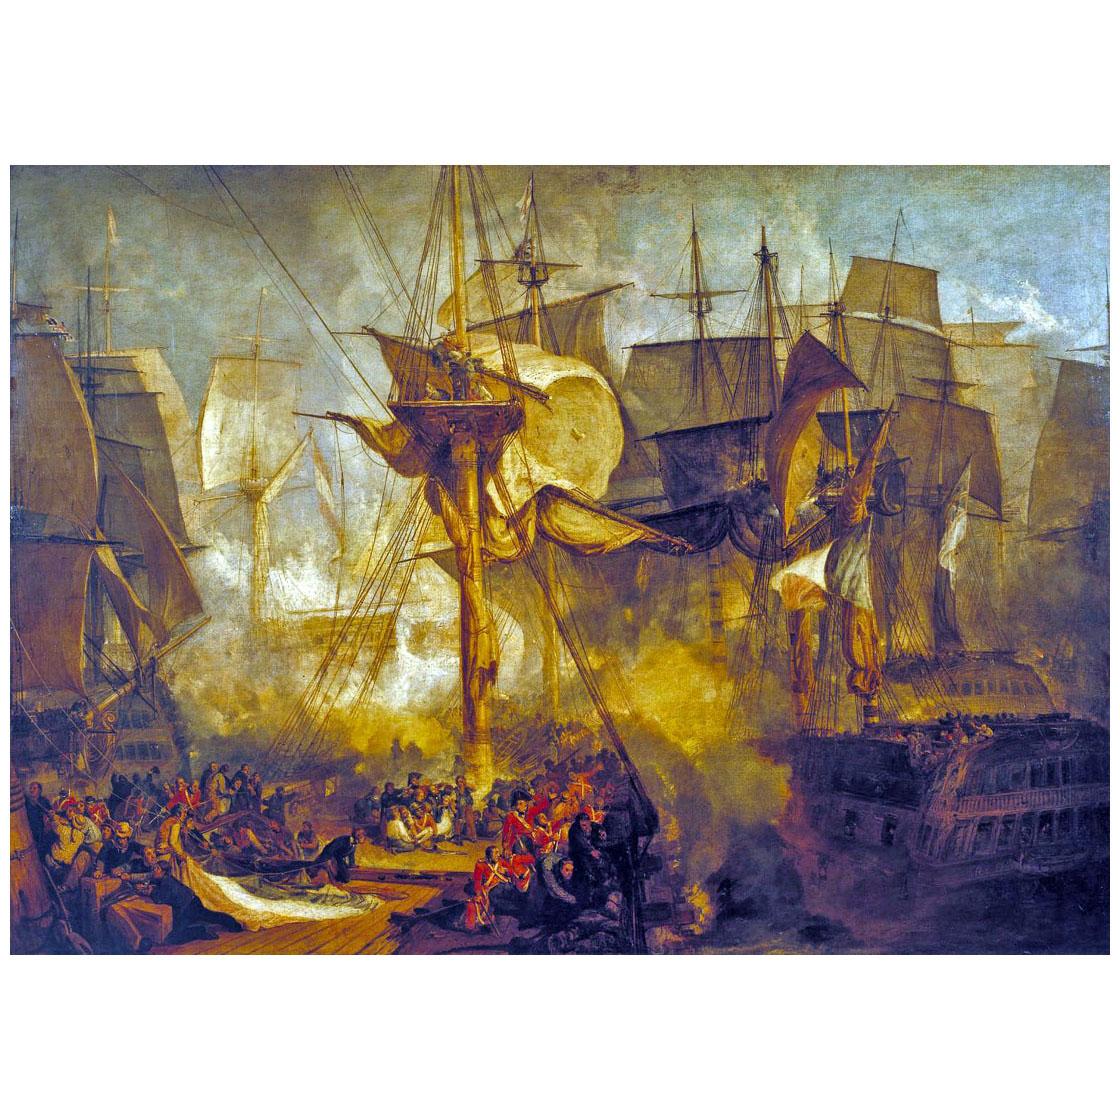 William Turner. The Battle of Trafalgar. 1806. Tate Britain